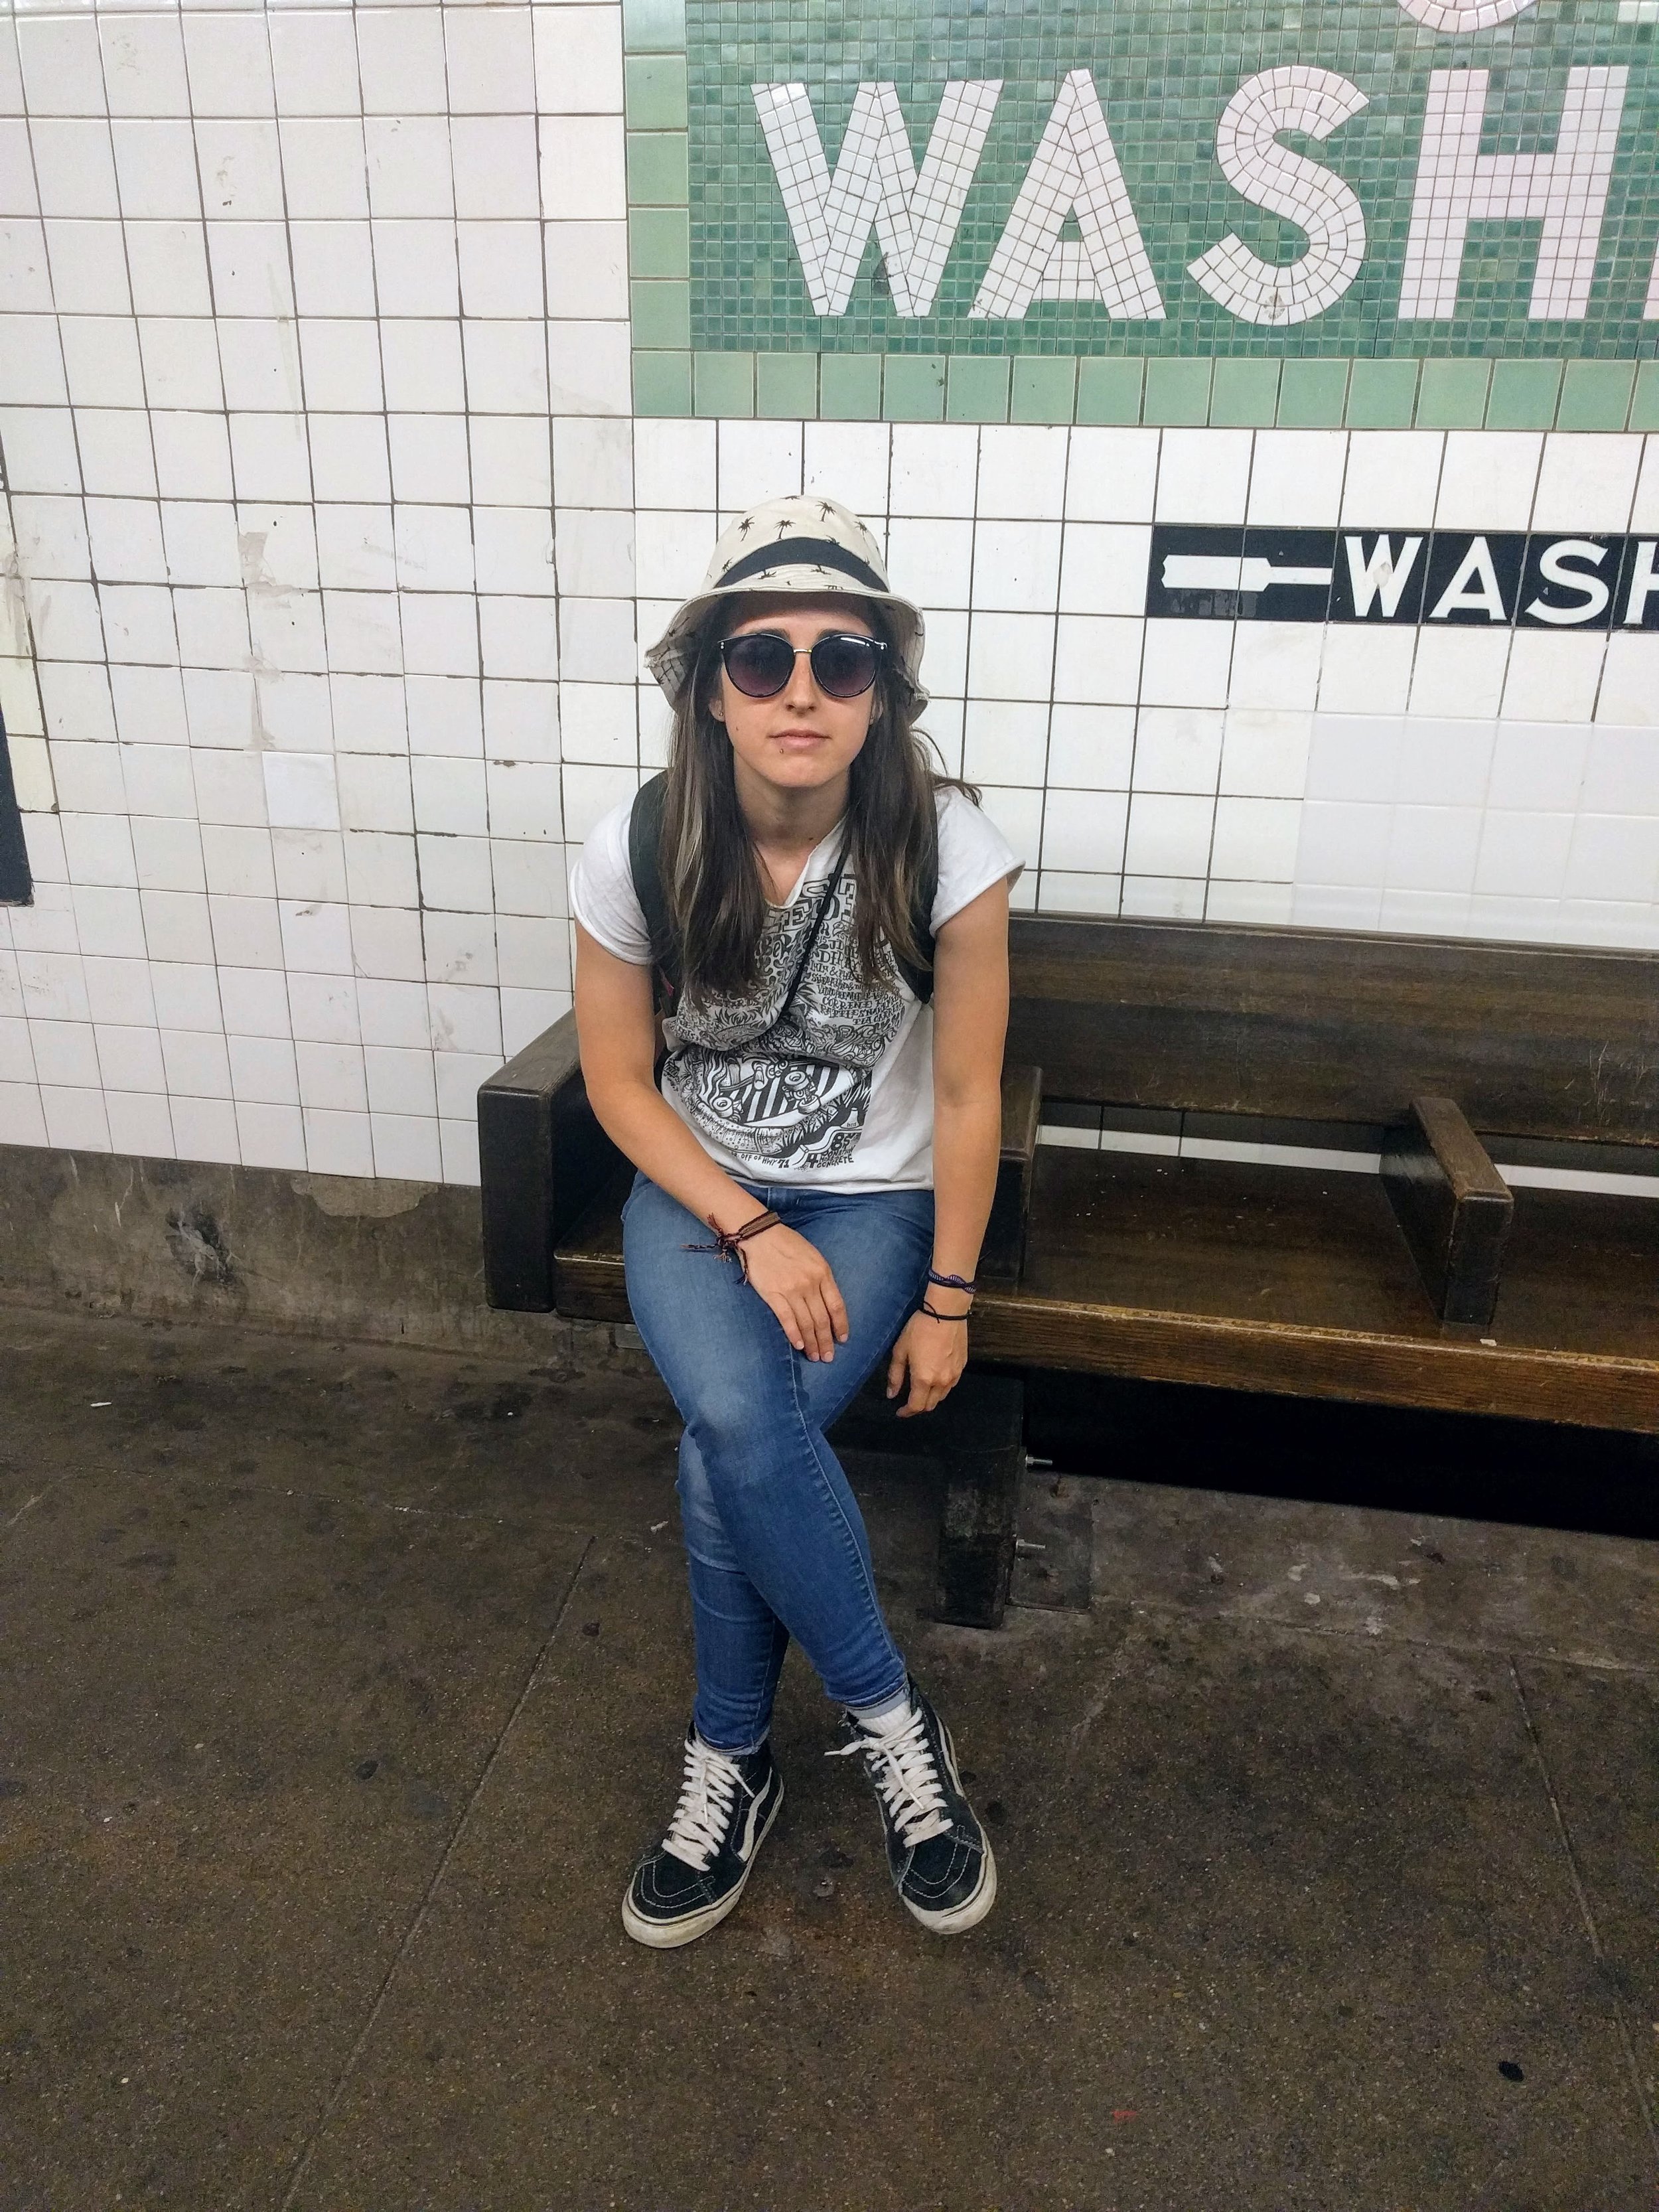  My city subway rat 